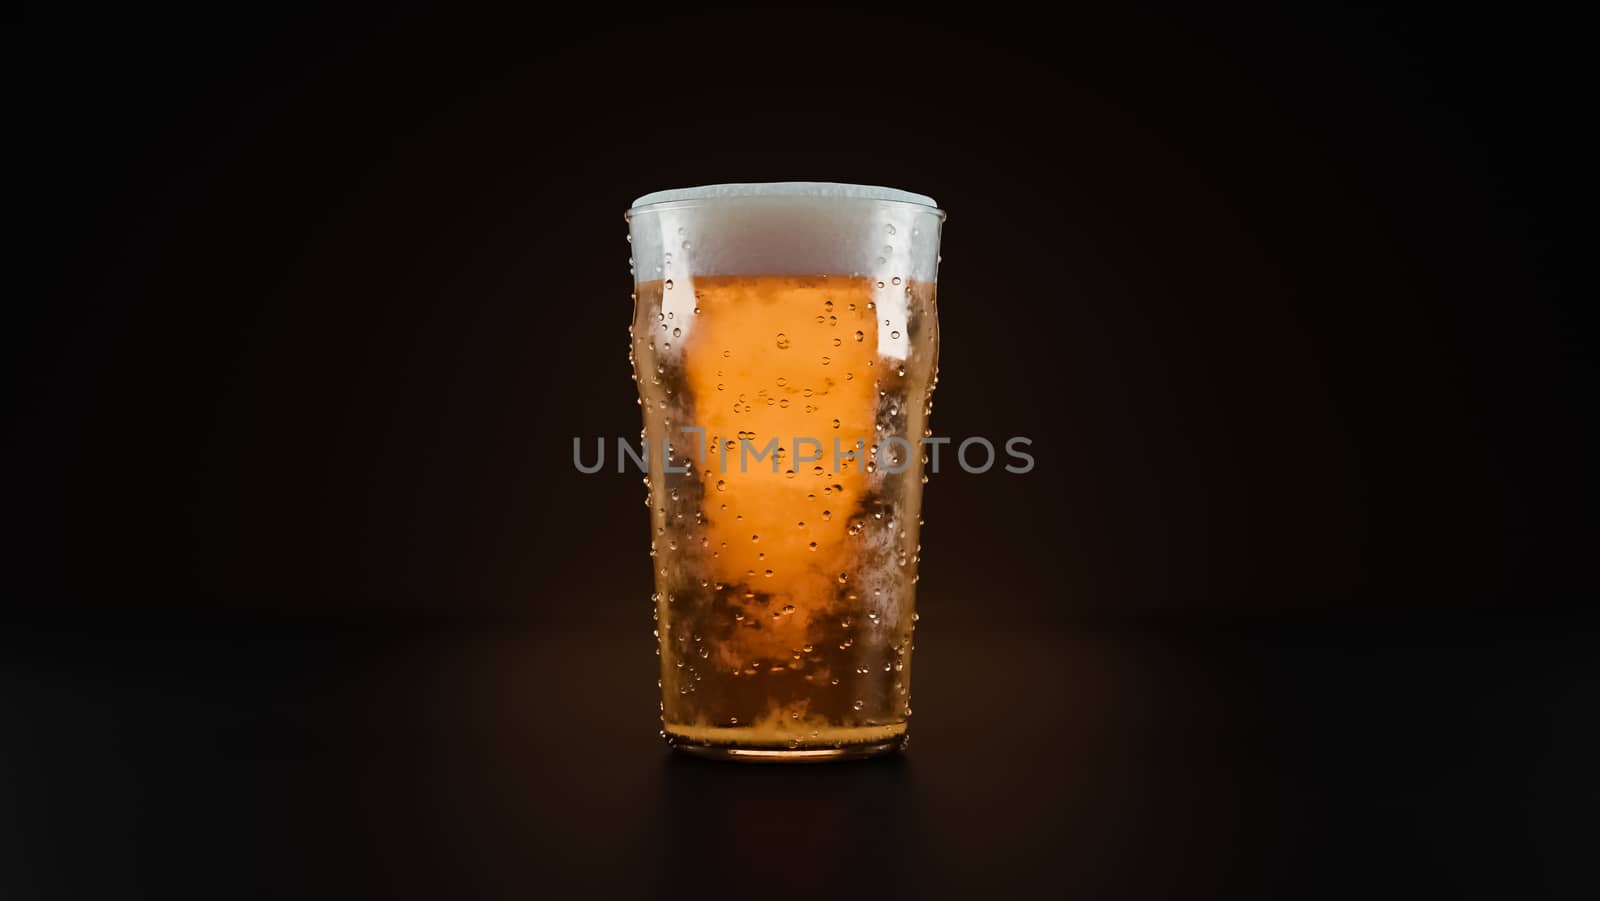 Glass of light beer on dark background.,3d model and illustration.